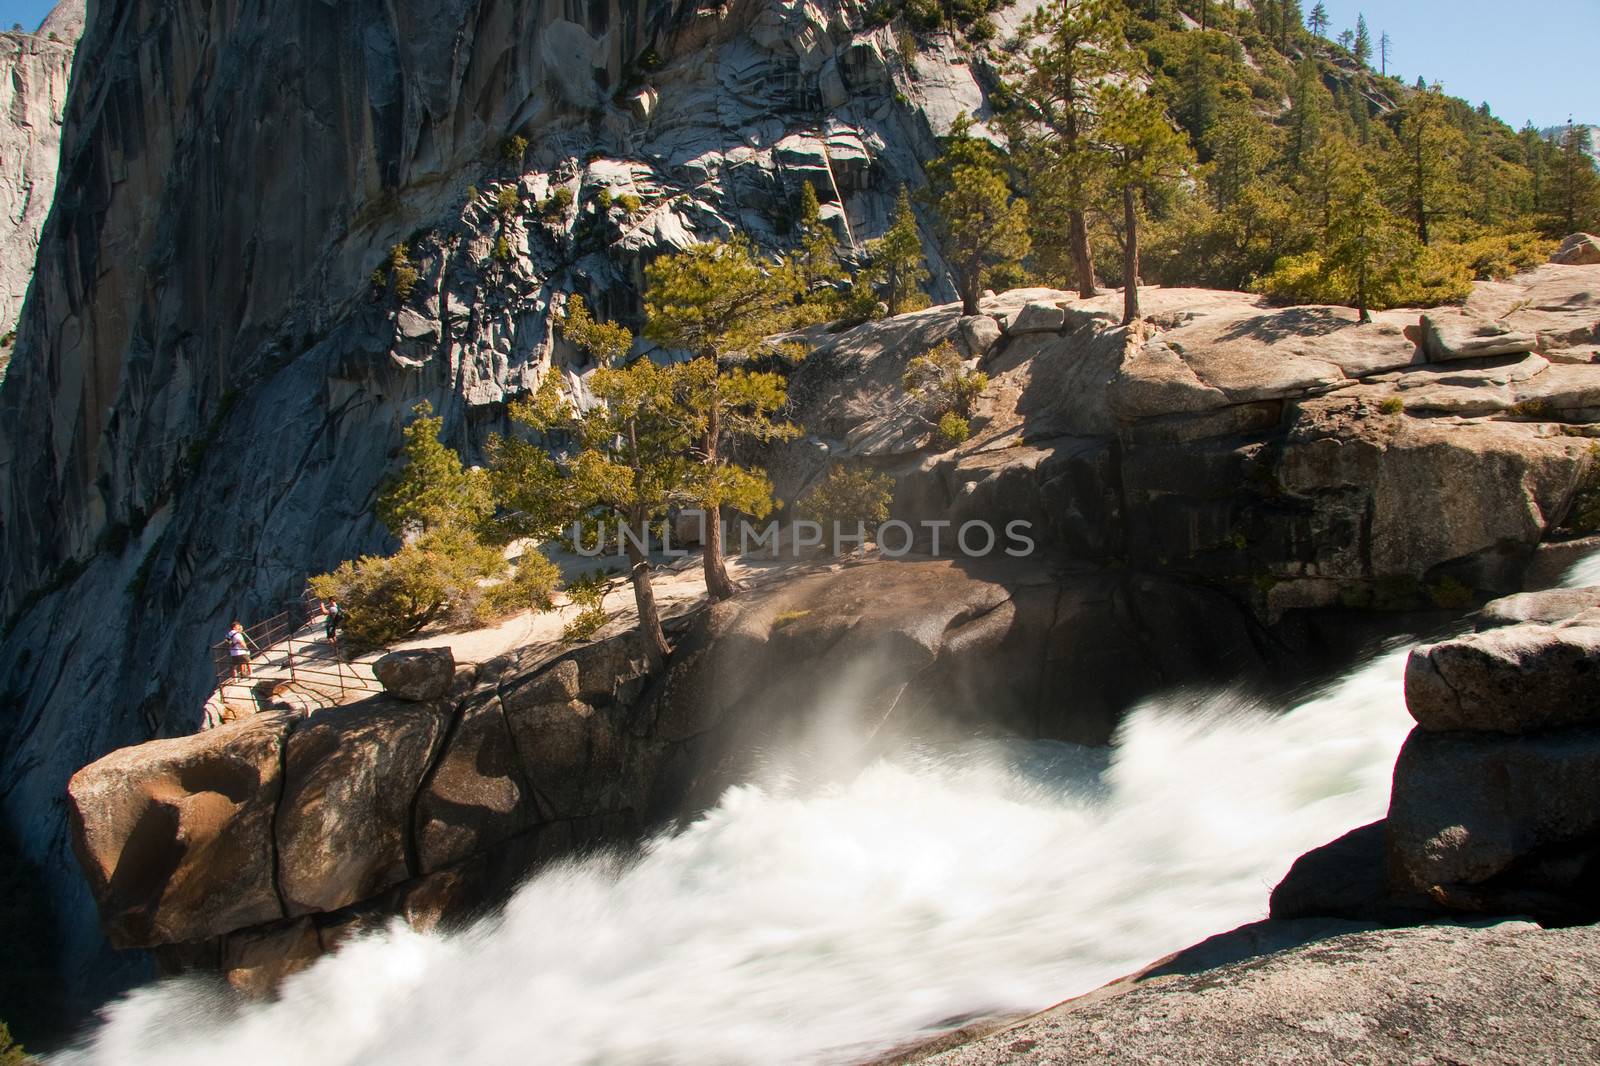 Waterfall in Yosemite National Park by CelsoDiniz